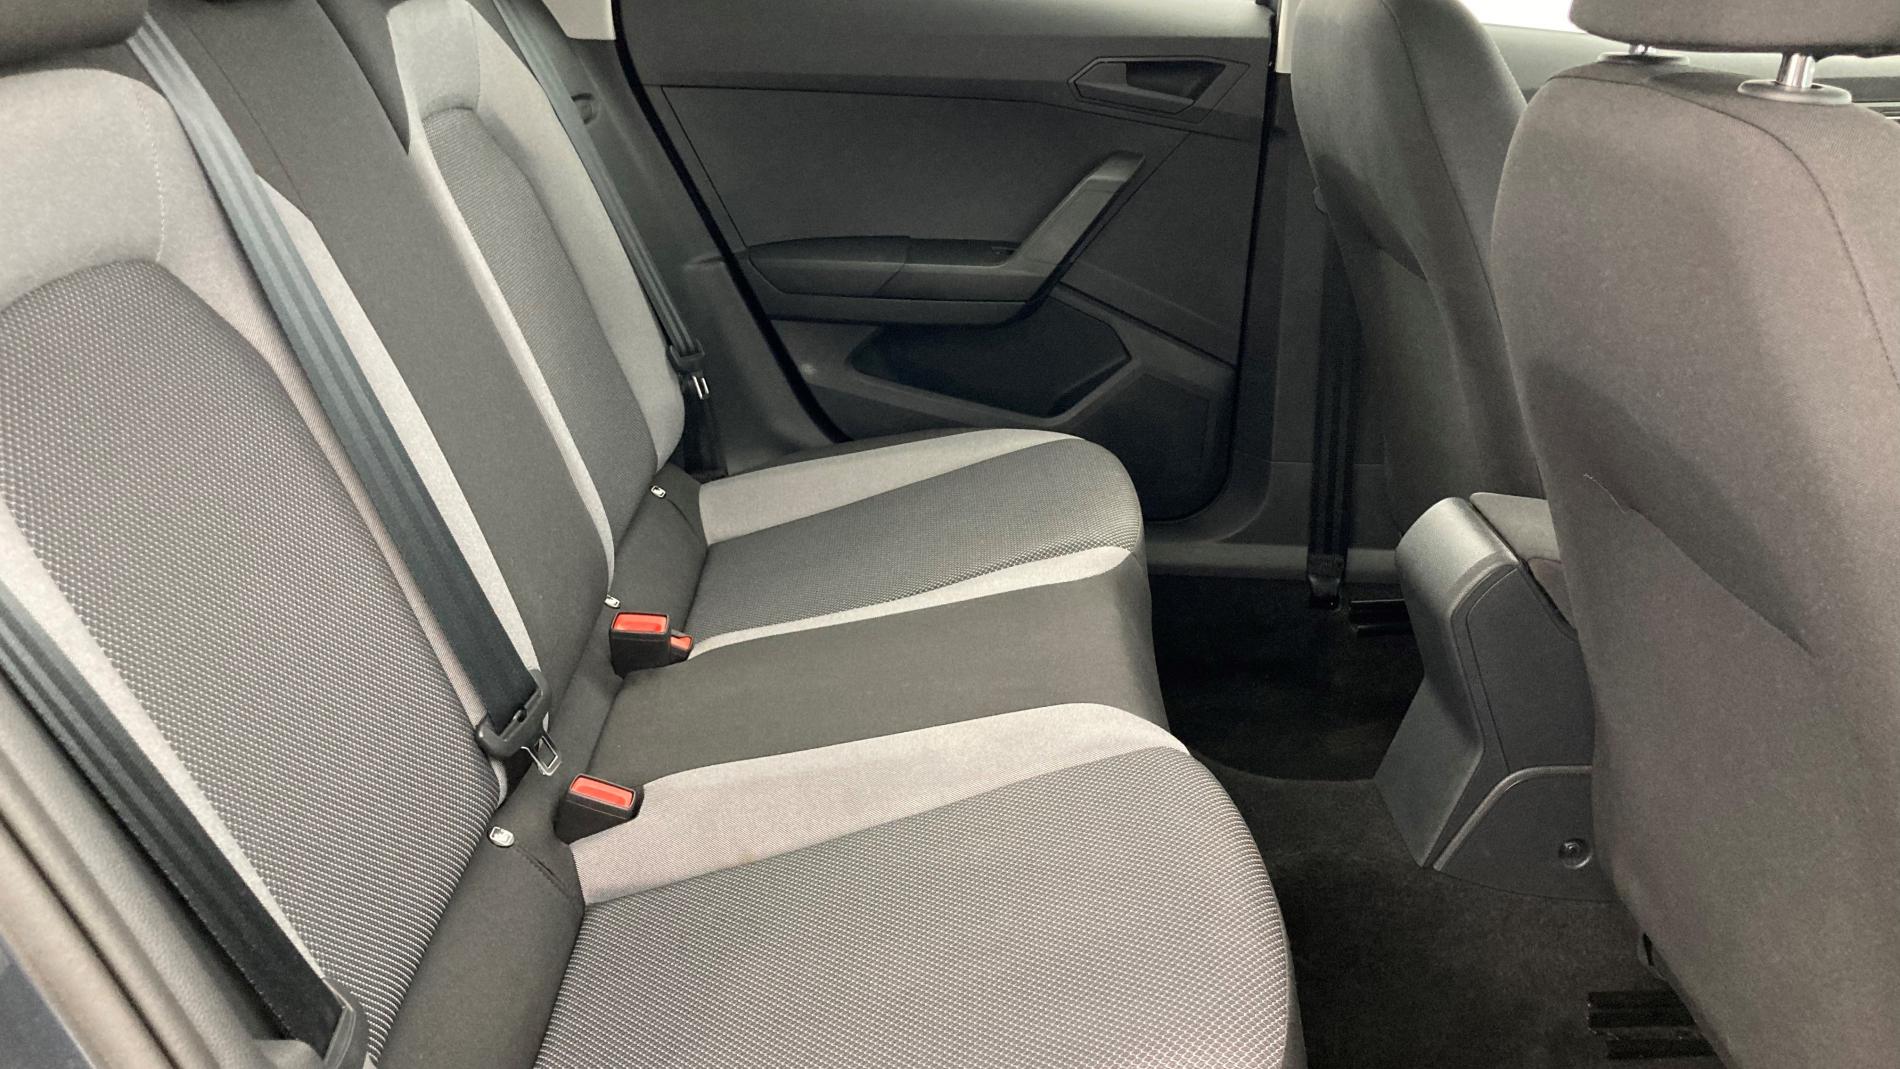 seat ibiza style 1.0 MPI 80 2019 gris magnetic 13